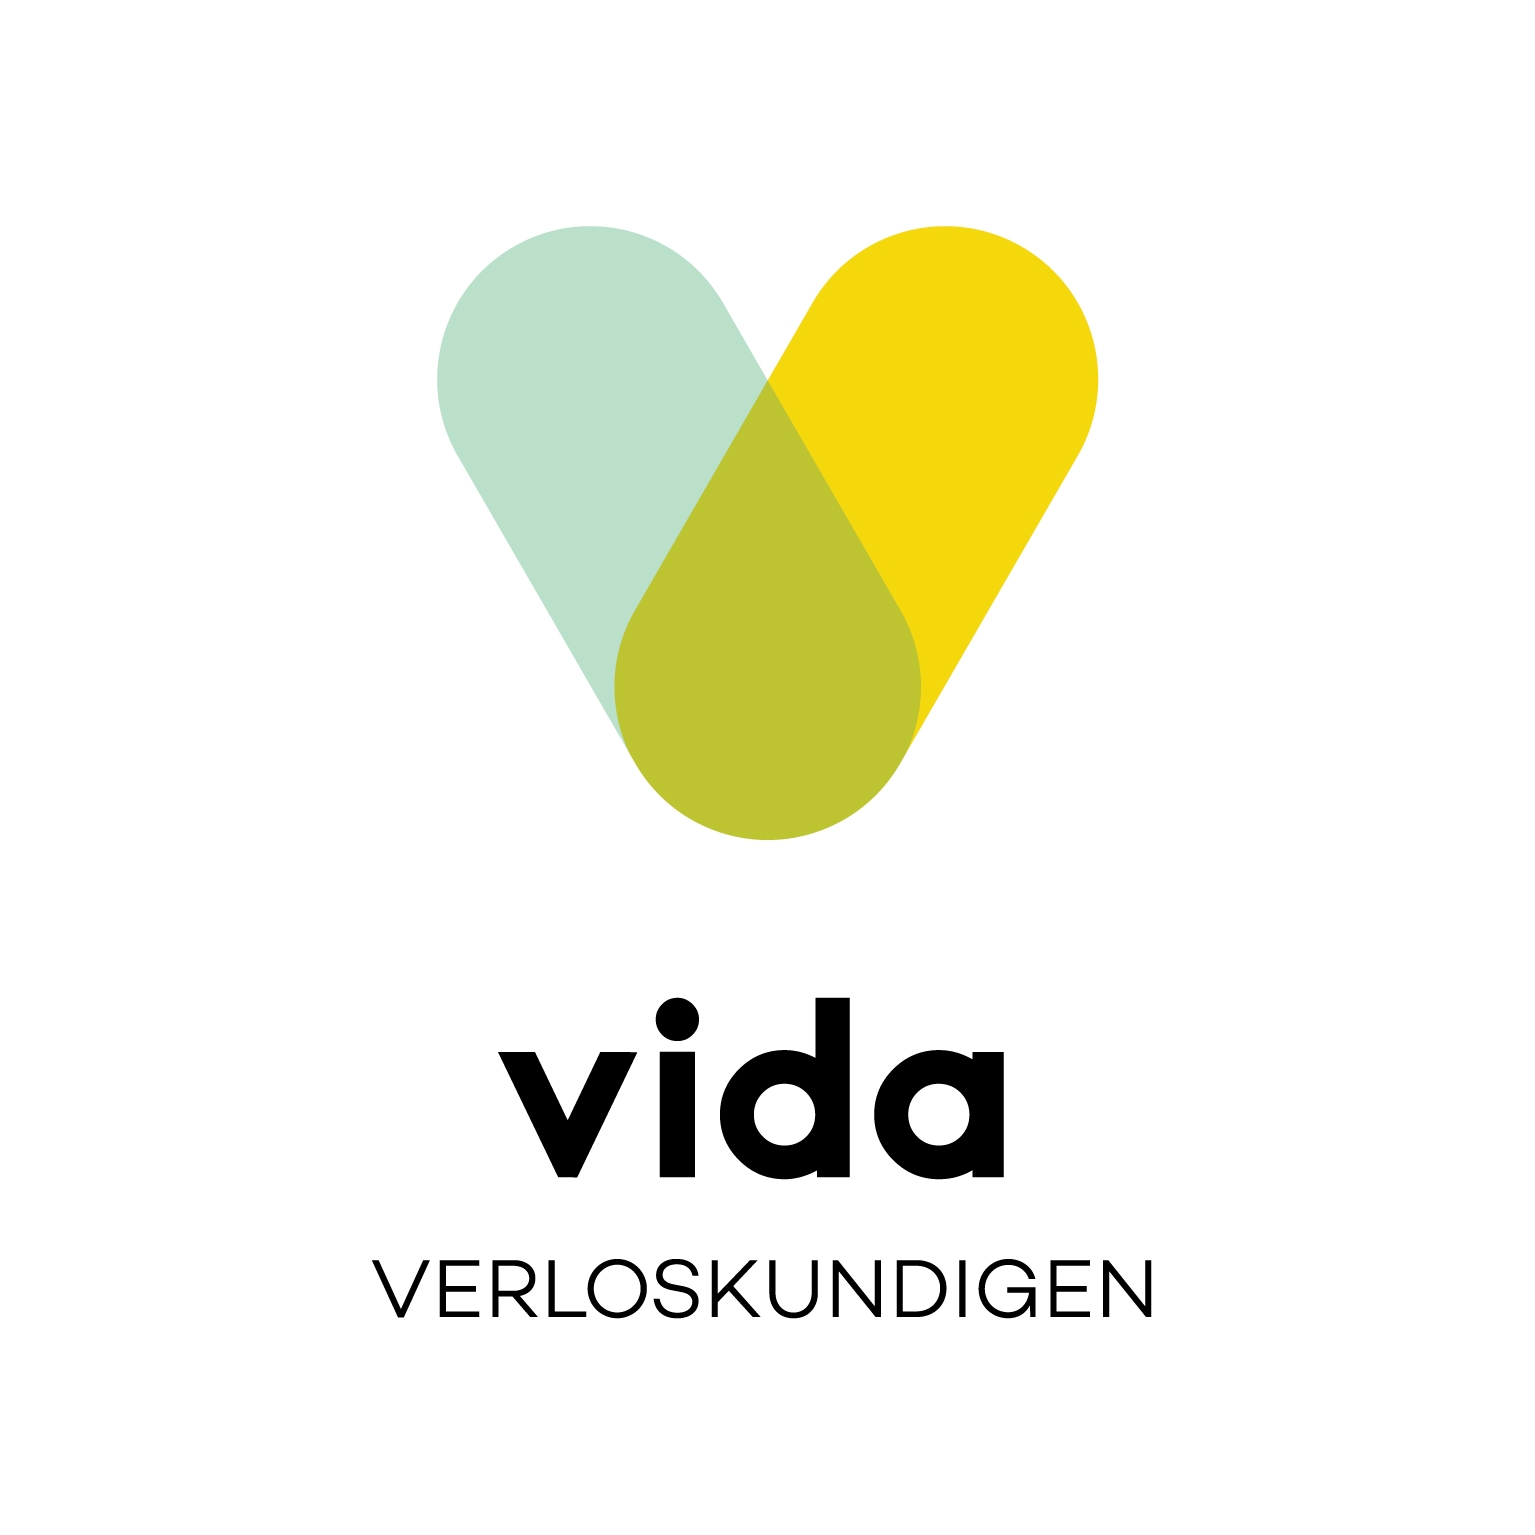 Verloskundigen Praktijk Vida Logo